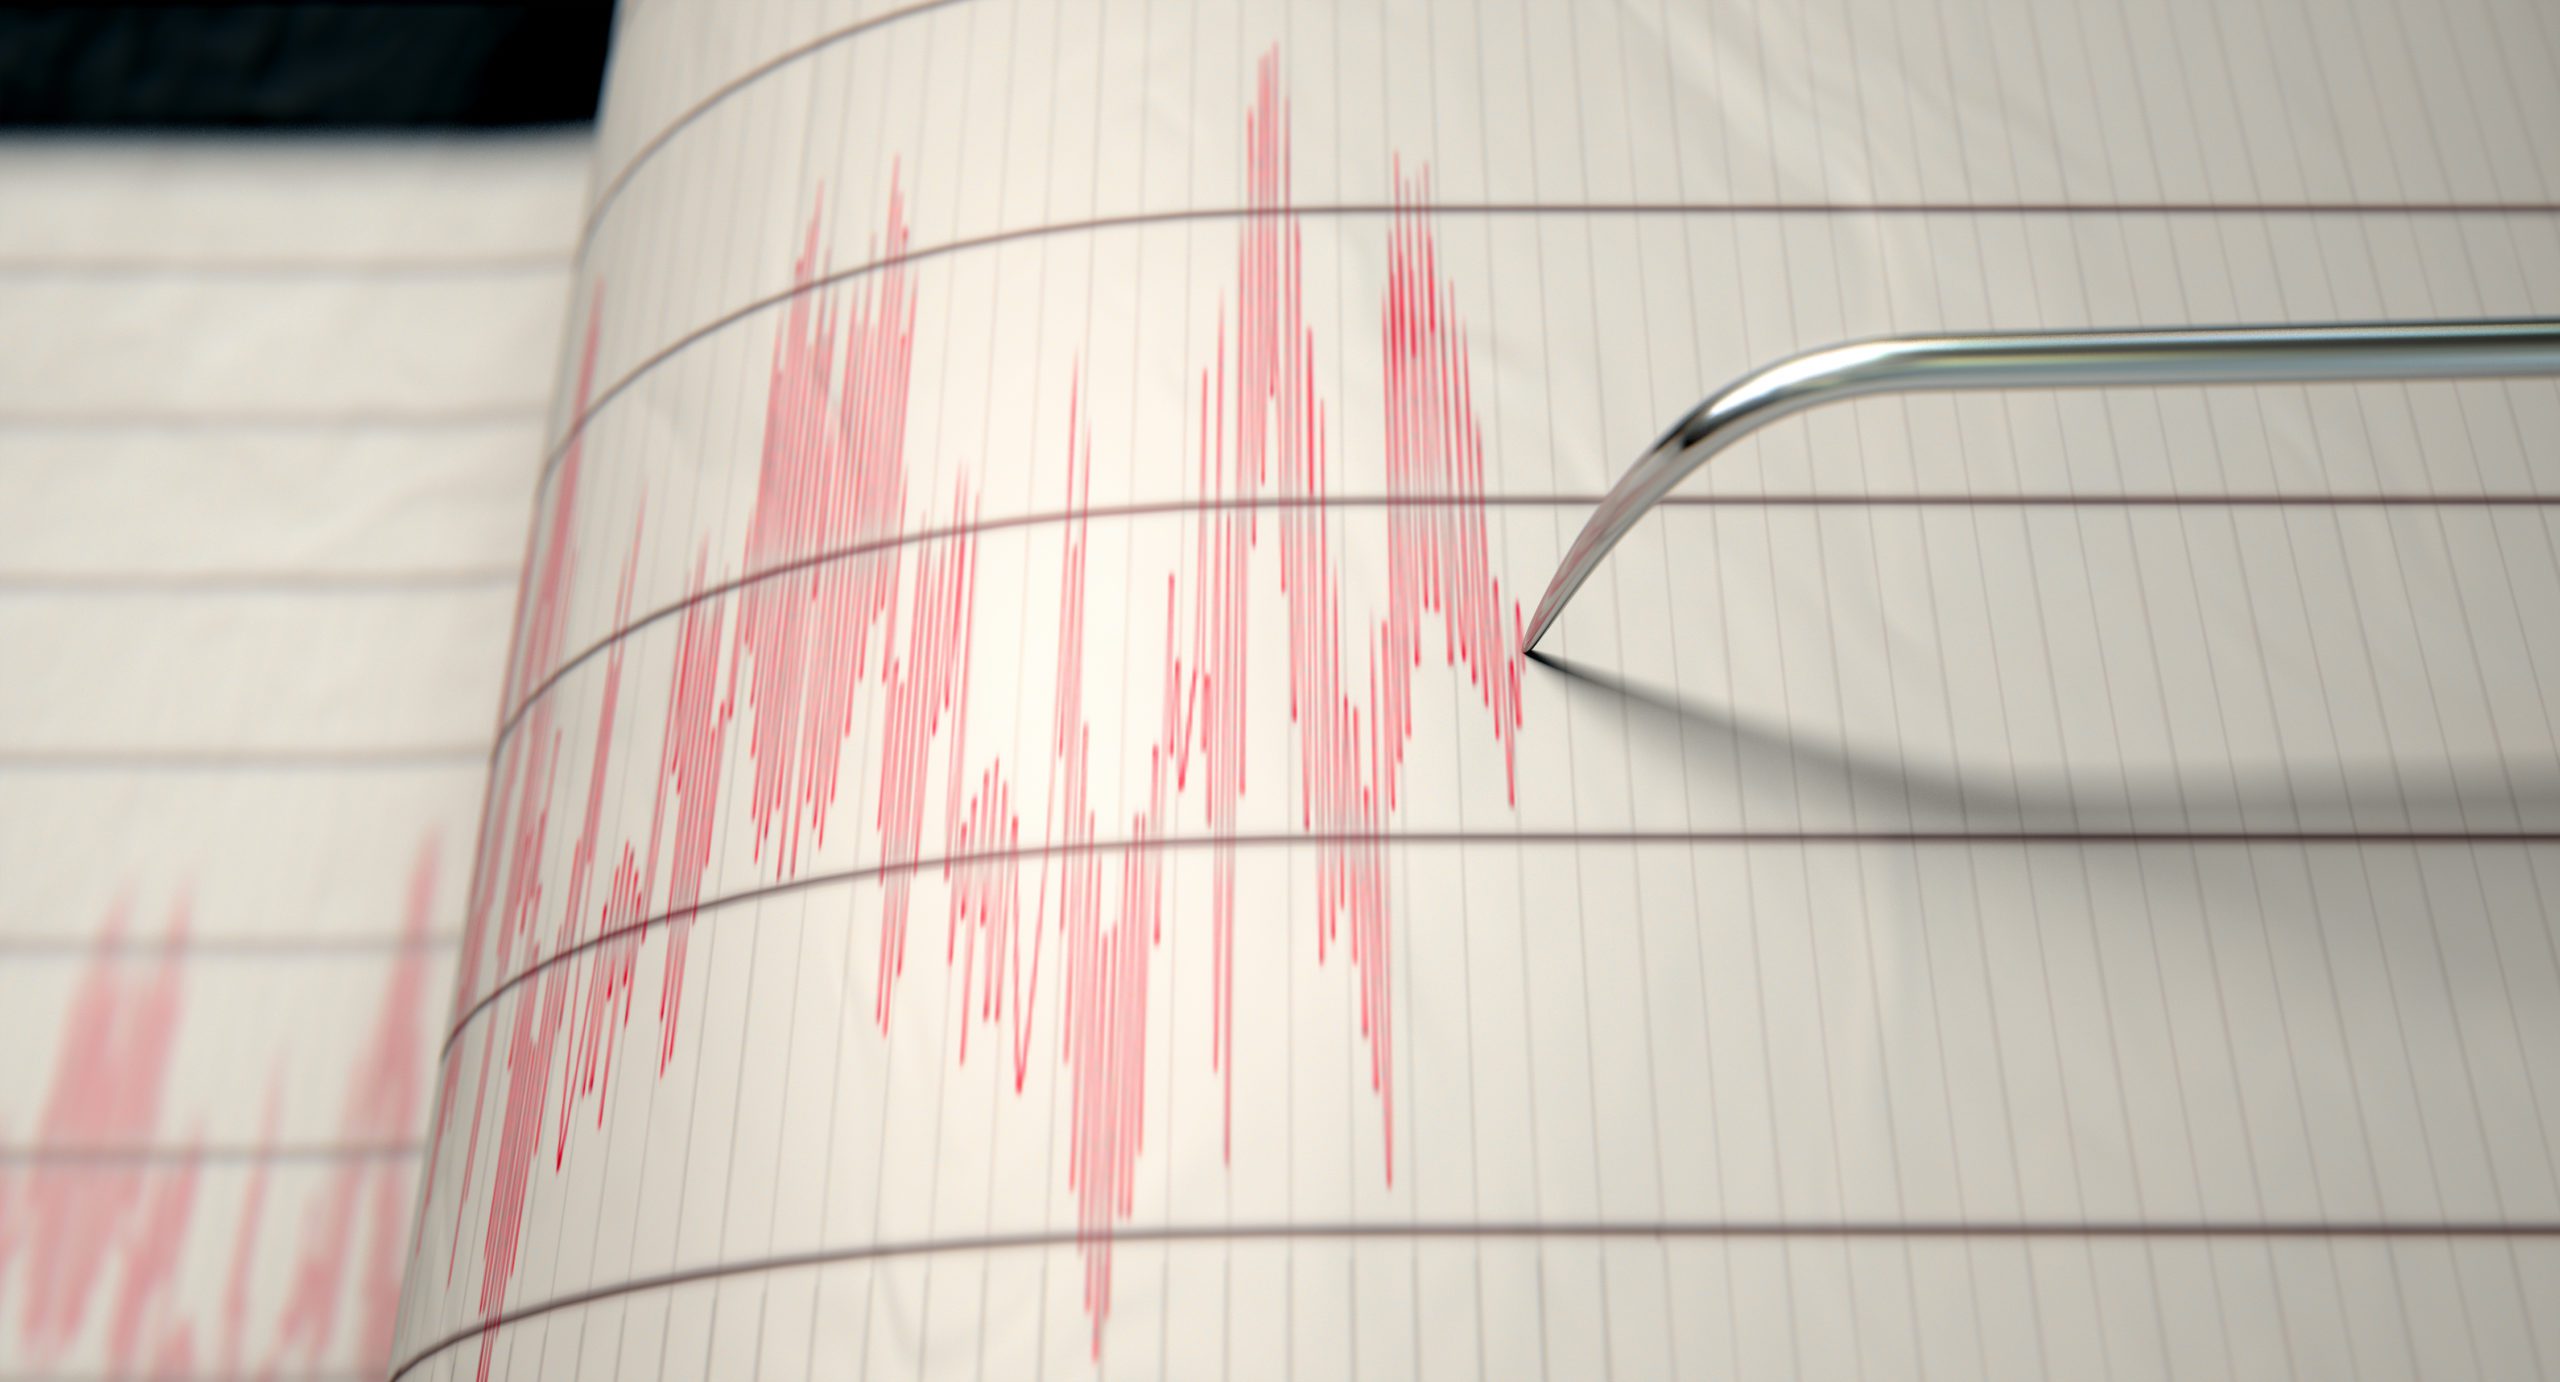 Earthquake hits Peru